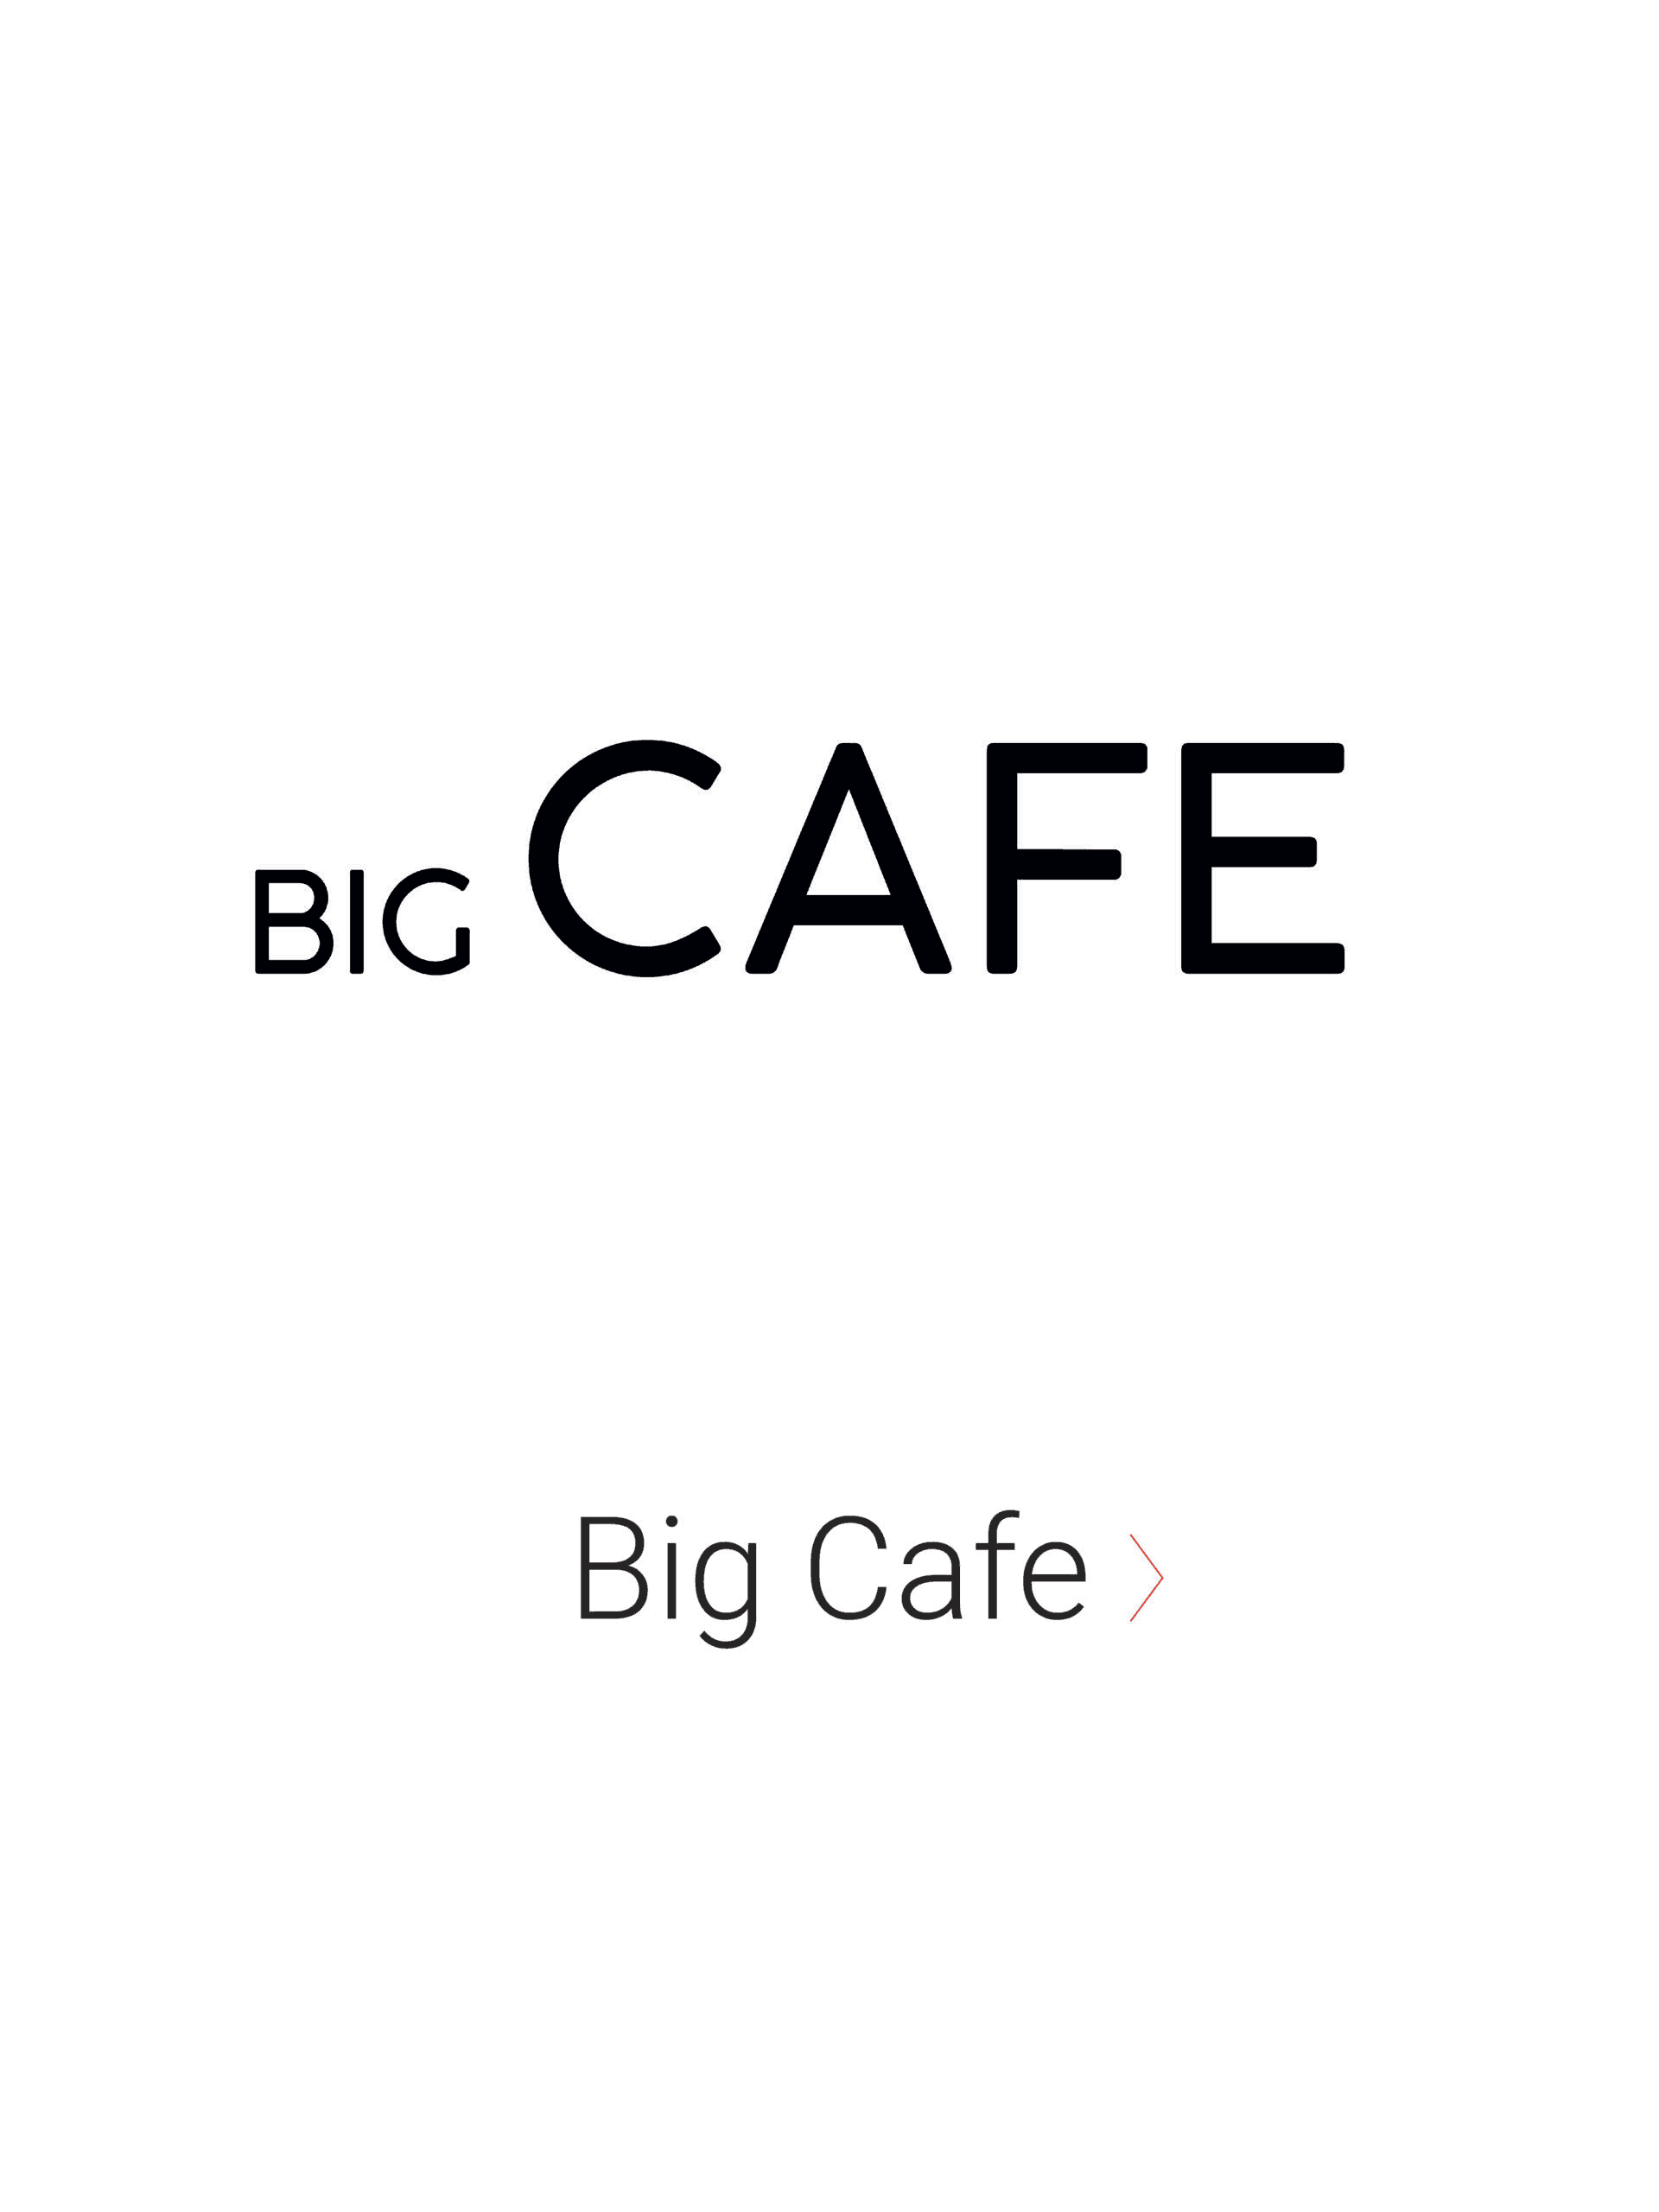 bigcafe